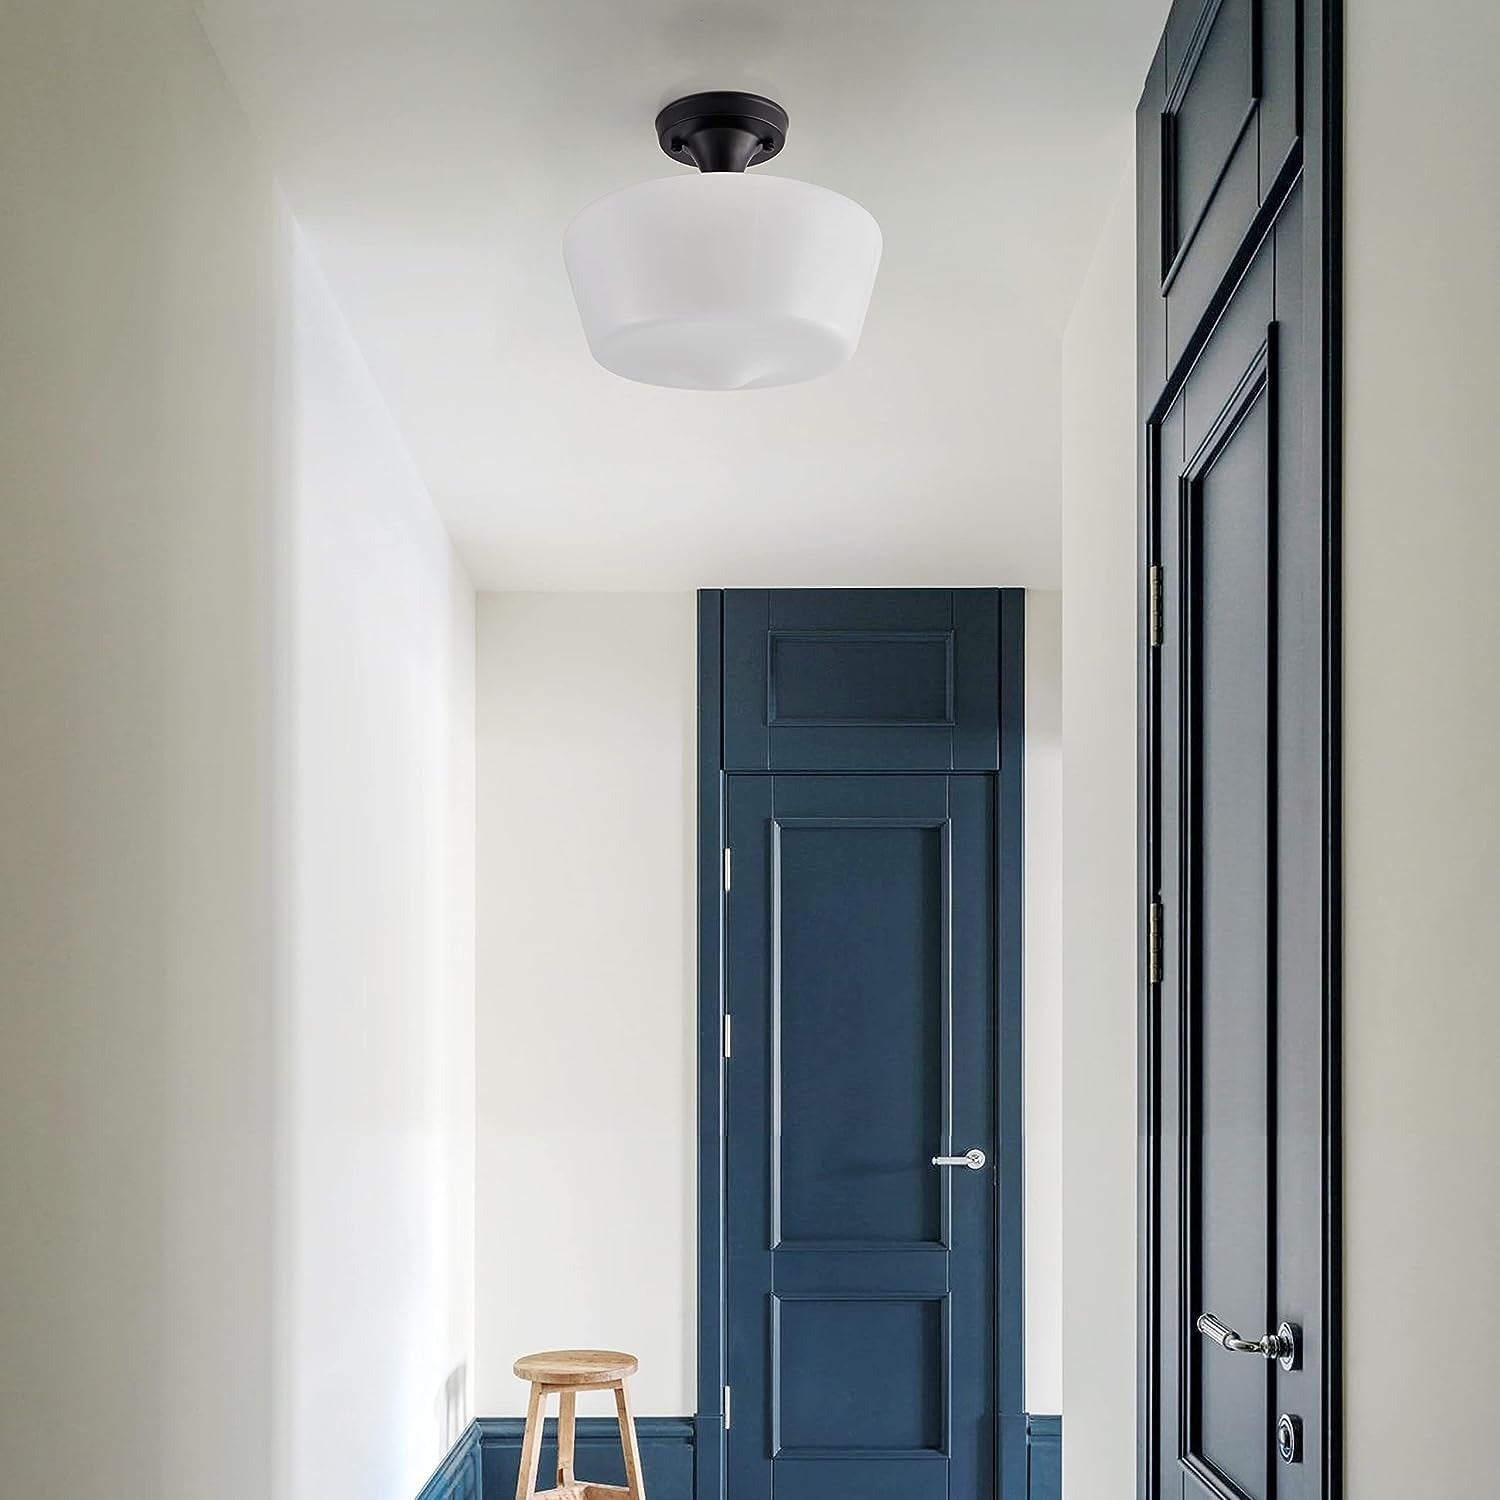 Bauhaus Cream Brass Hallway Ceiling Light